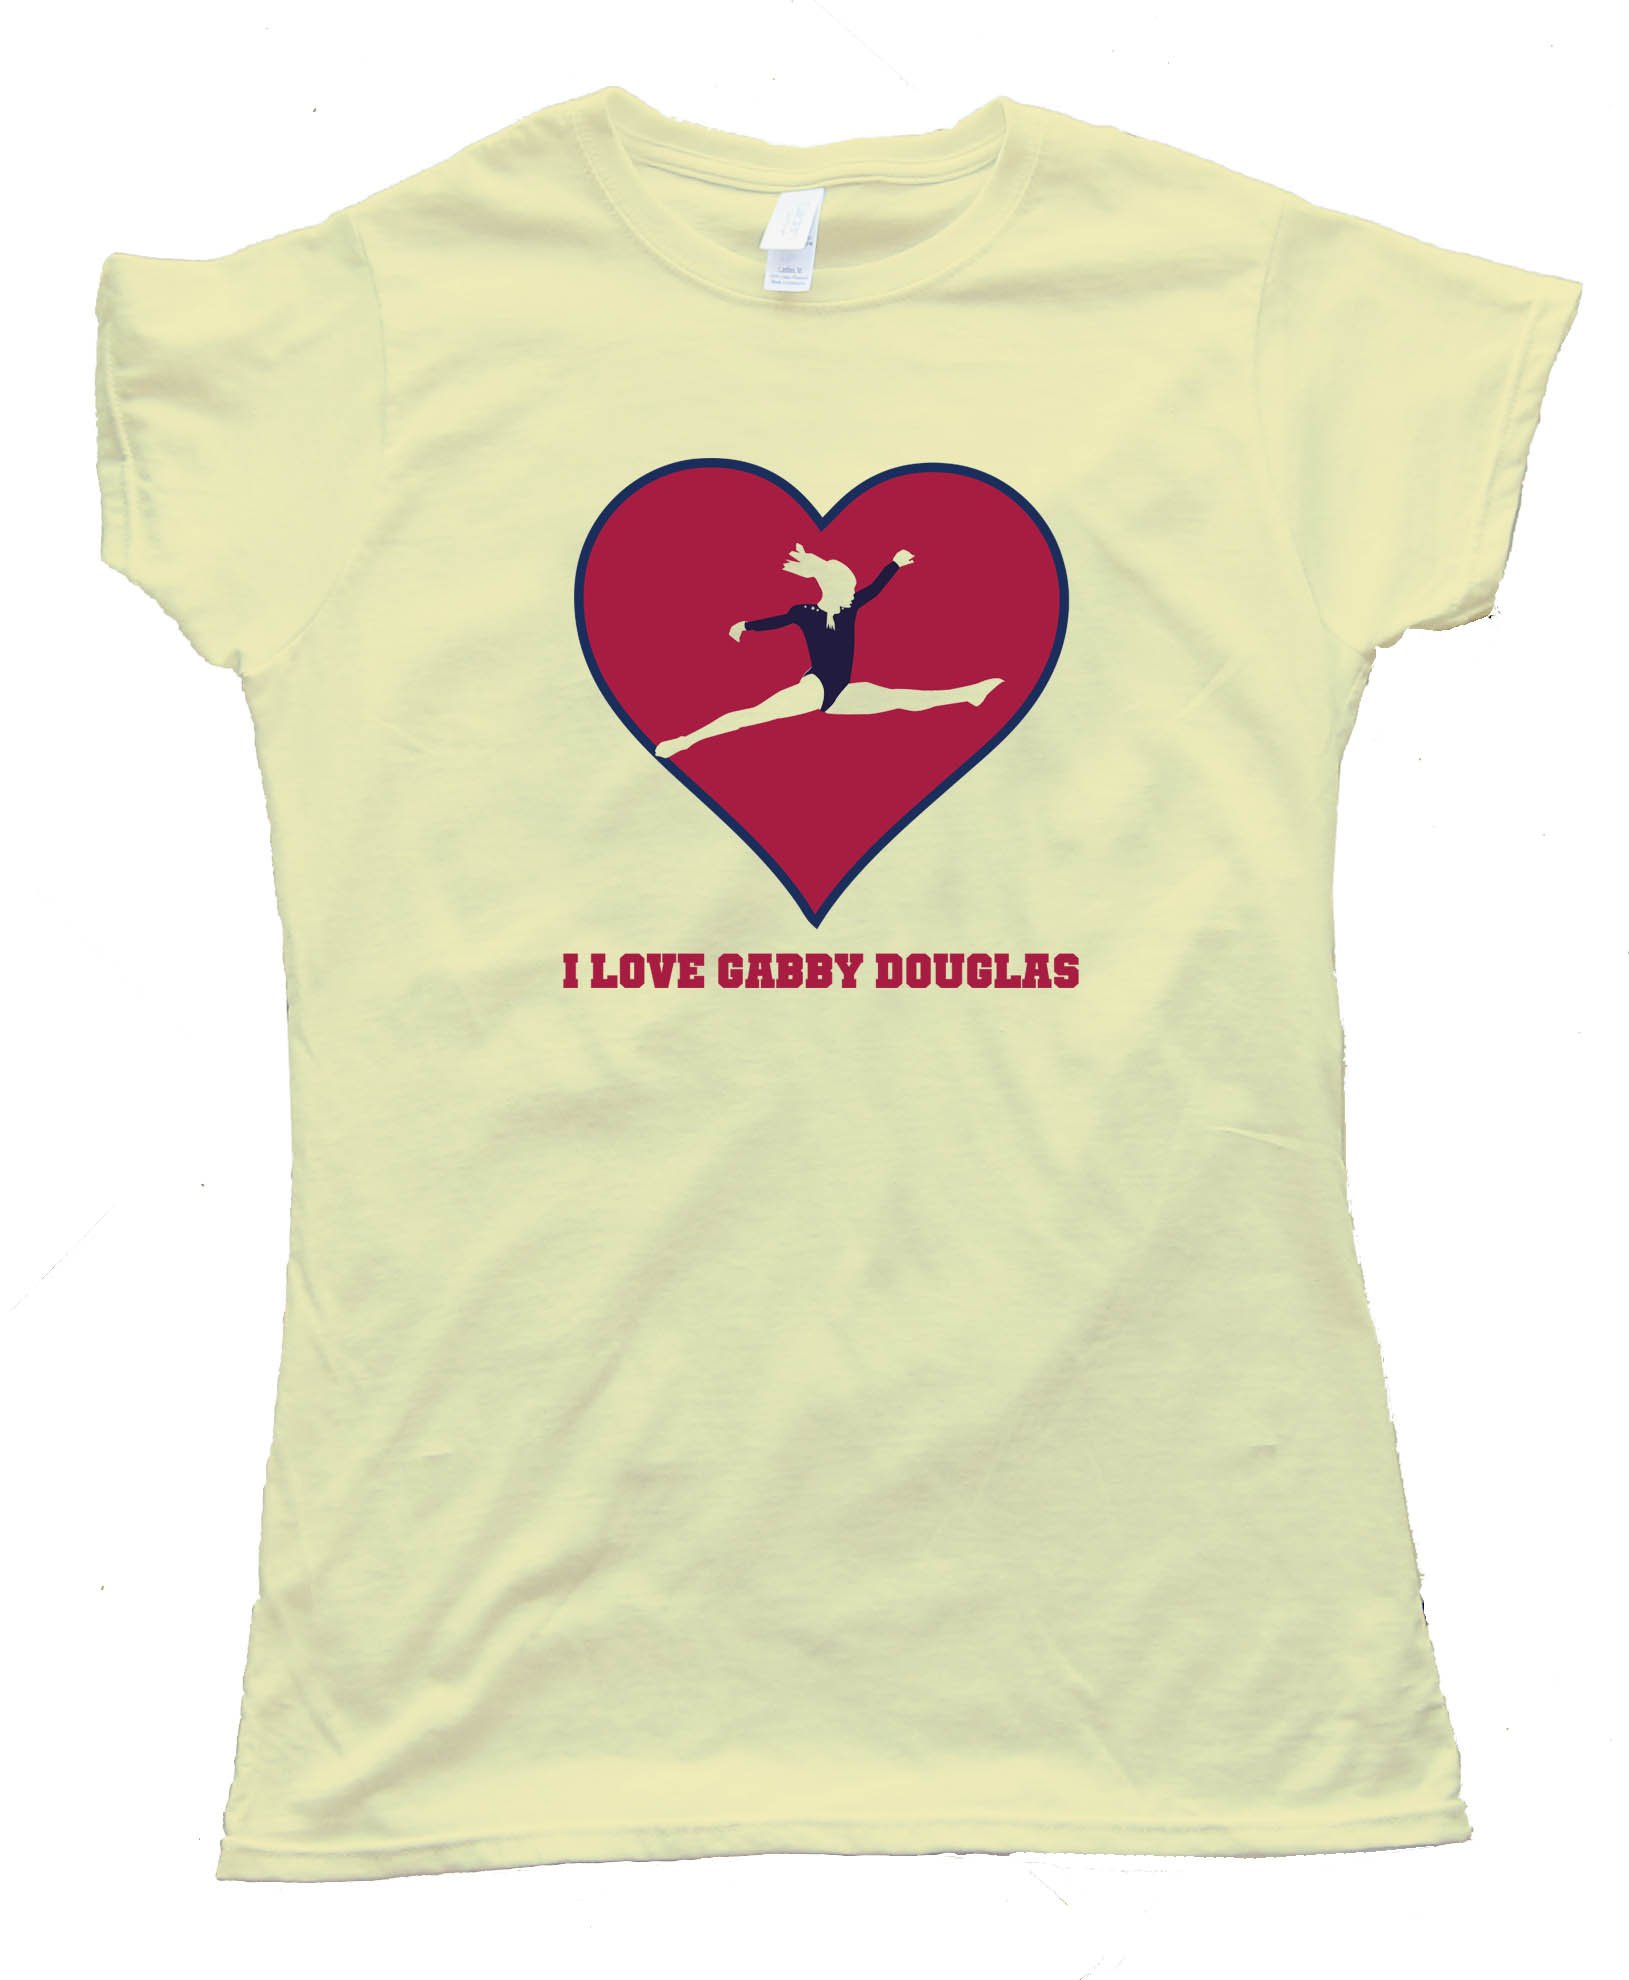 I Love Gabby Douglas - Tee Shirt